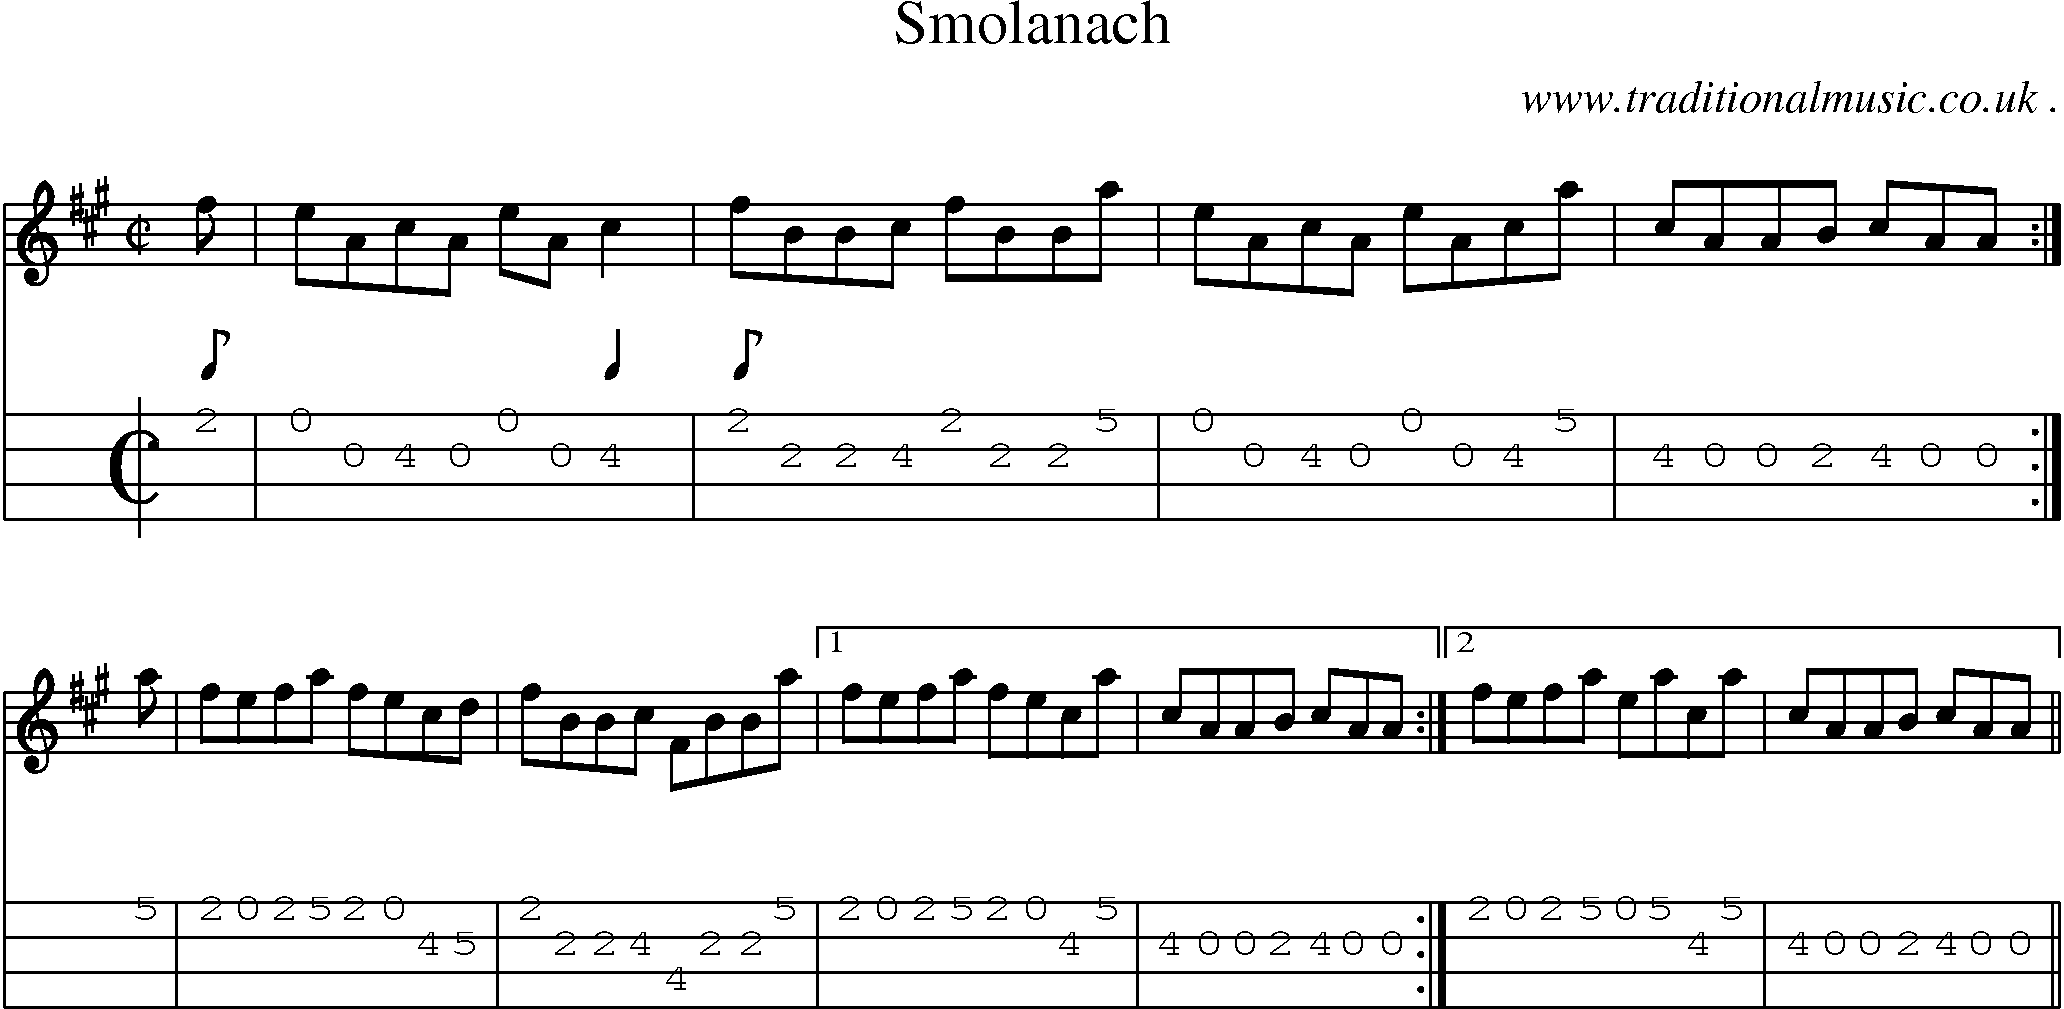 Sheet-music  score, Chords and Mandolin Tabs for Smolanach